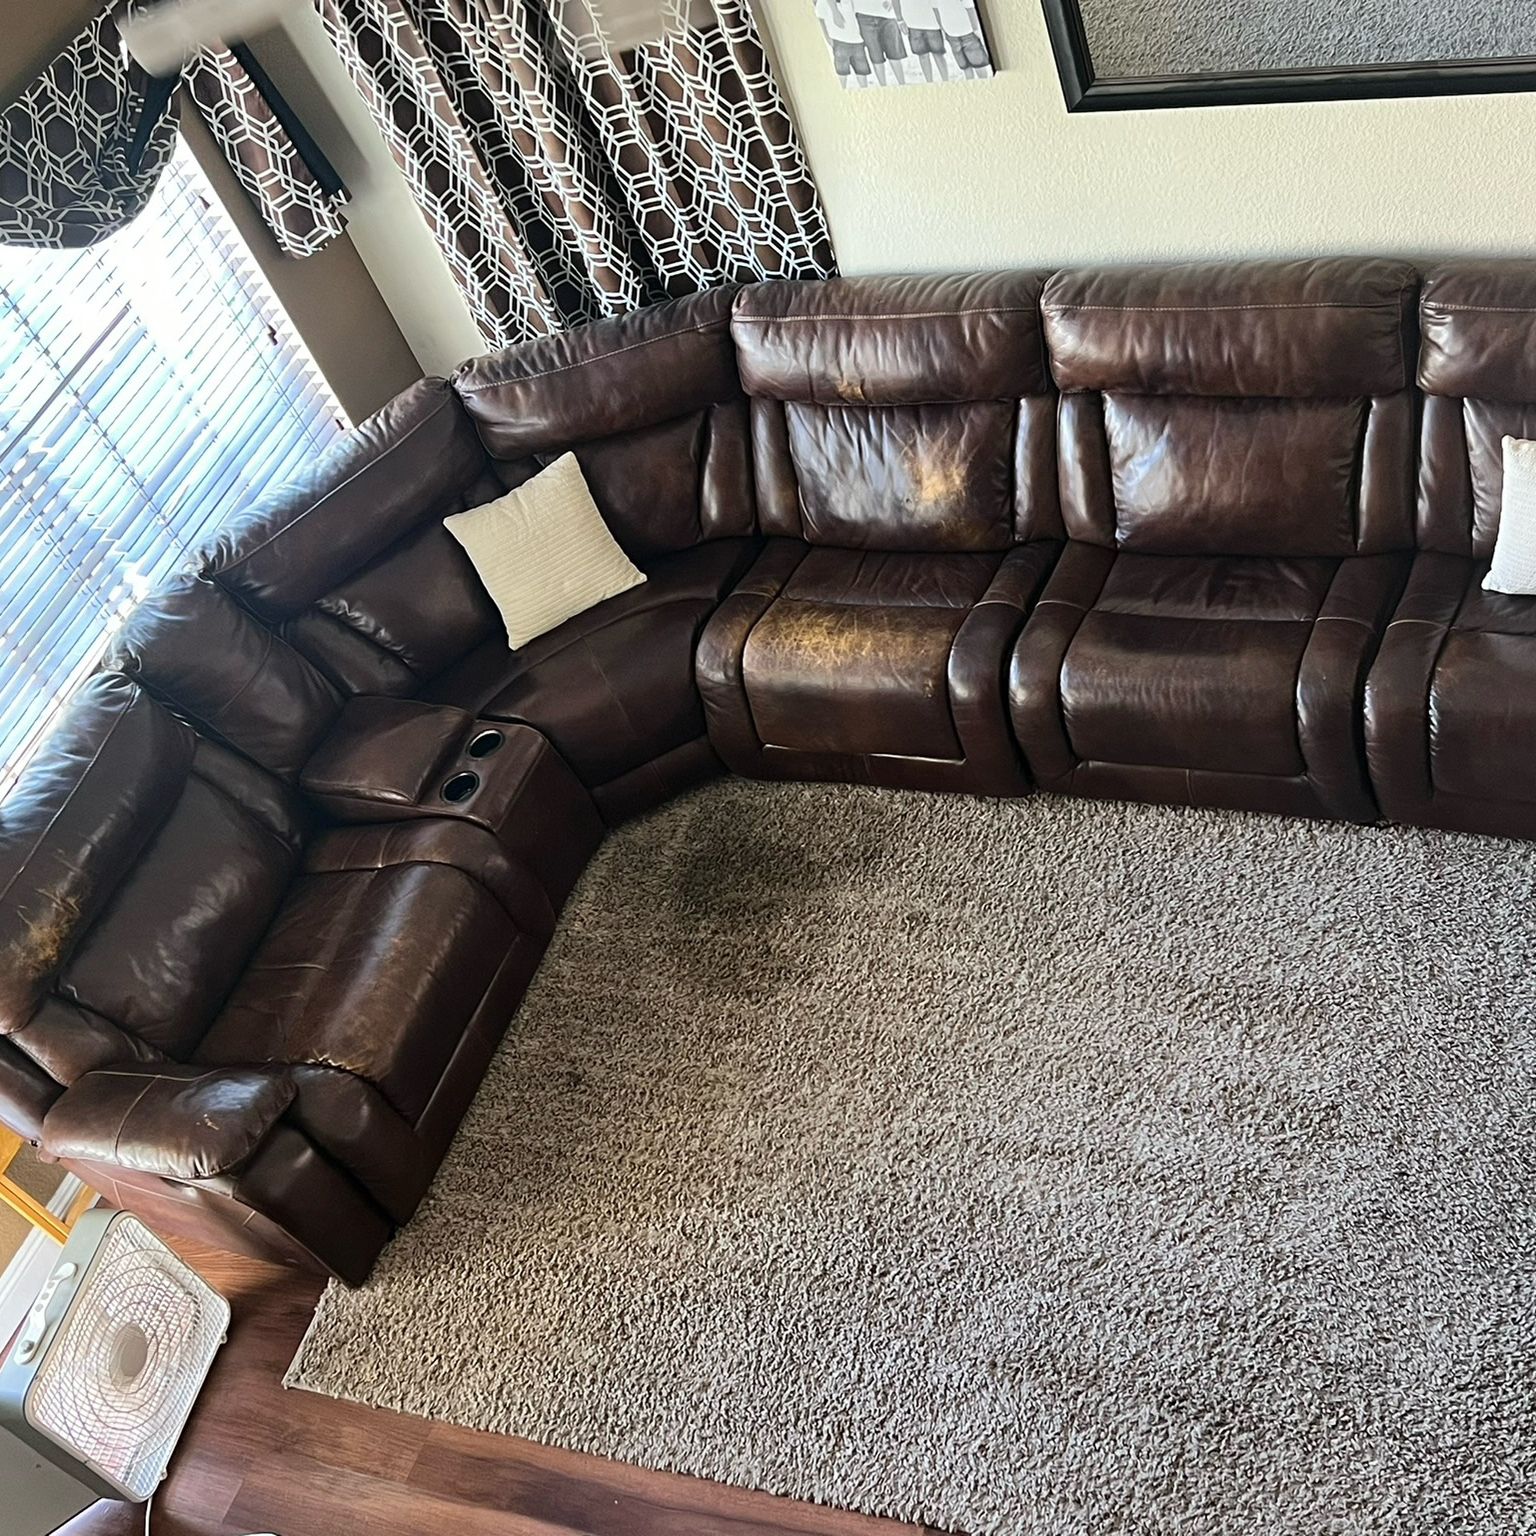 Oversized Ashley’s Furniture leather sectional